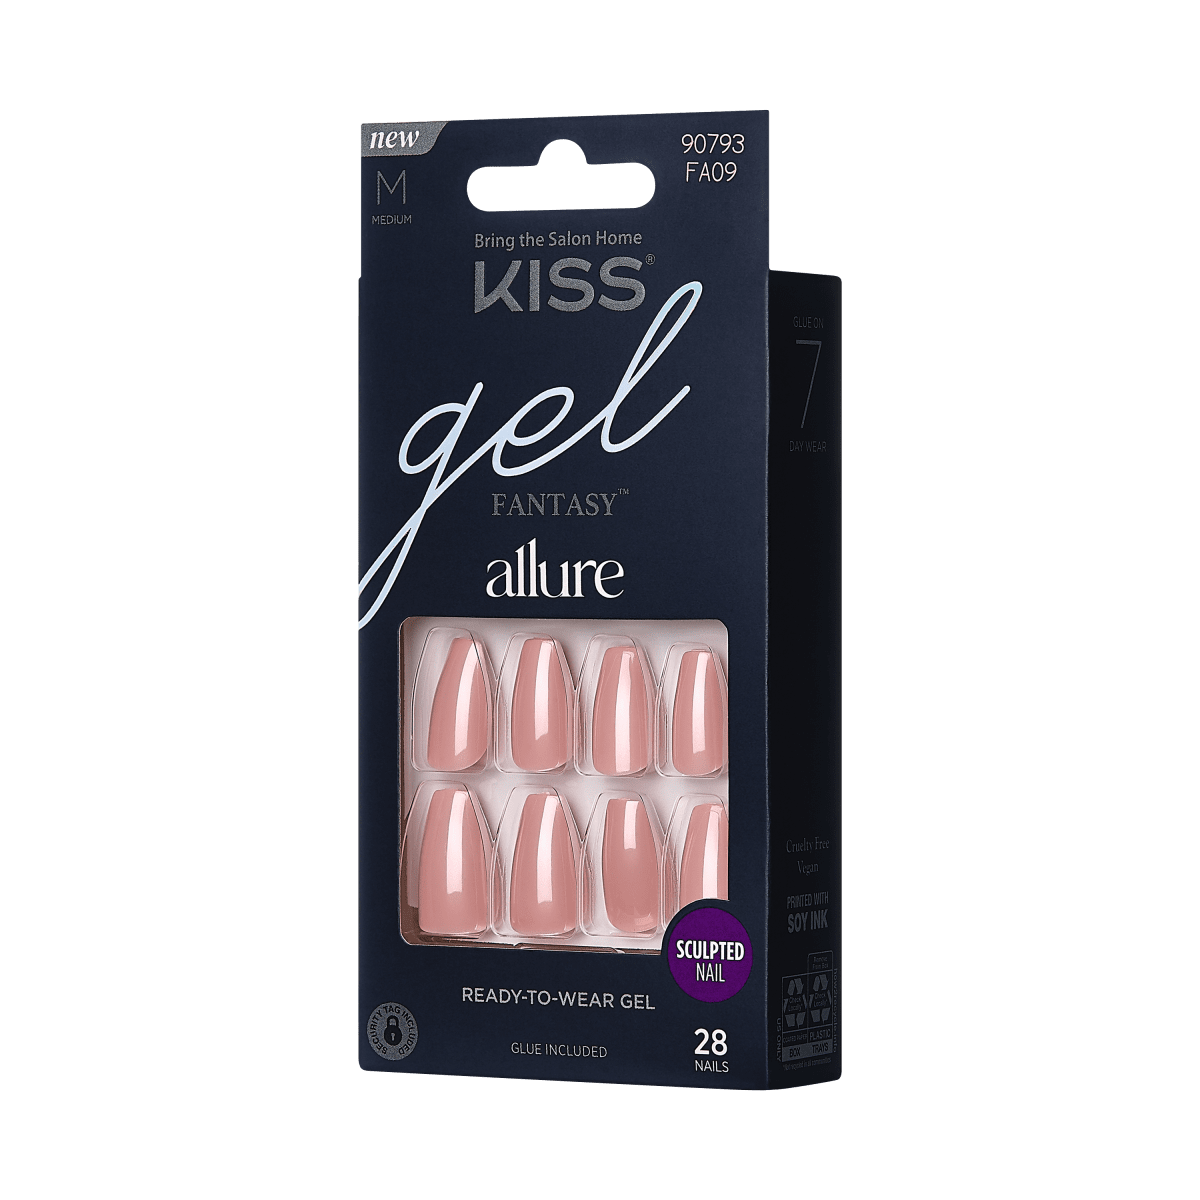 KISS Gel Fantasy Allure Glazed Donut Press-On Nails, Pink, Medium, Coffin Shape, 31 Ct.